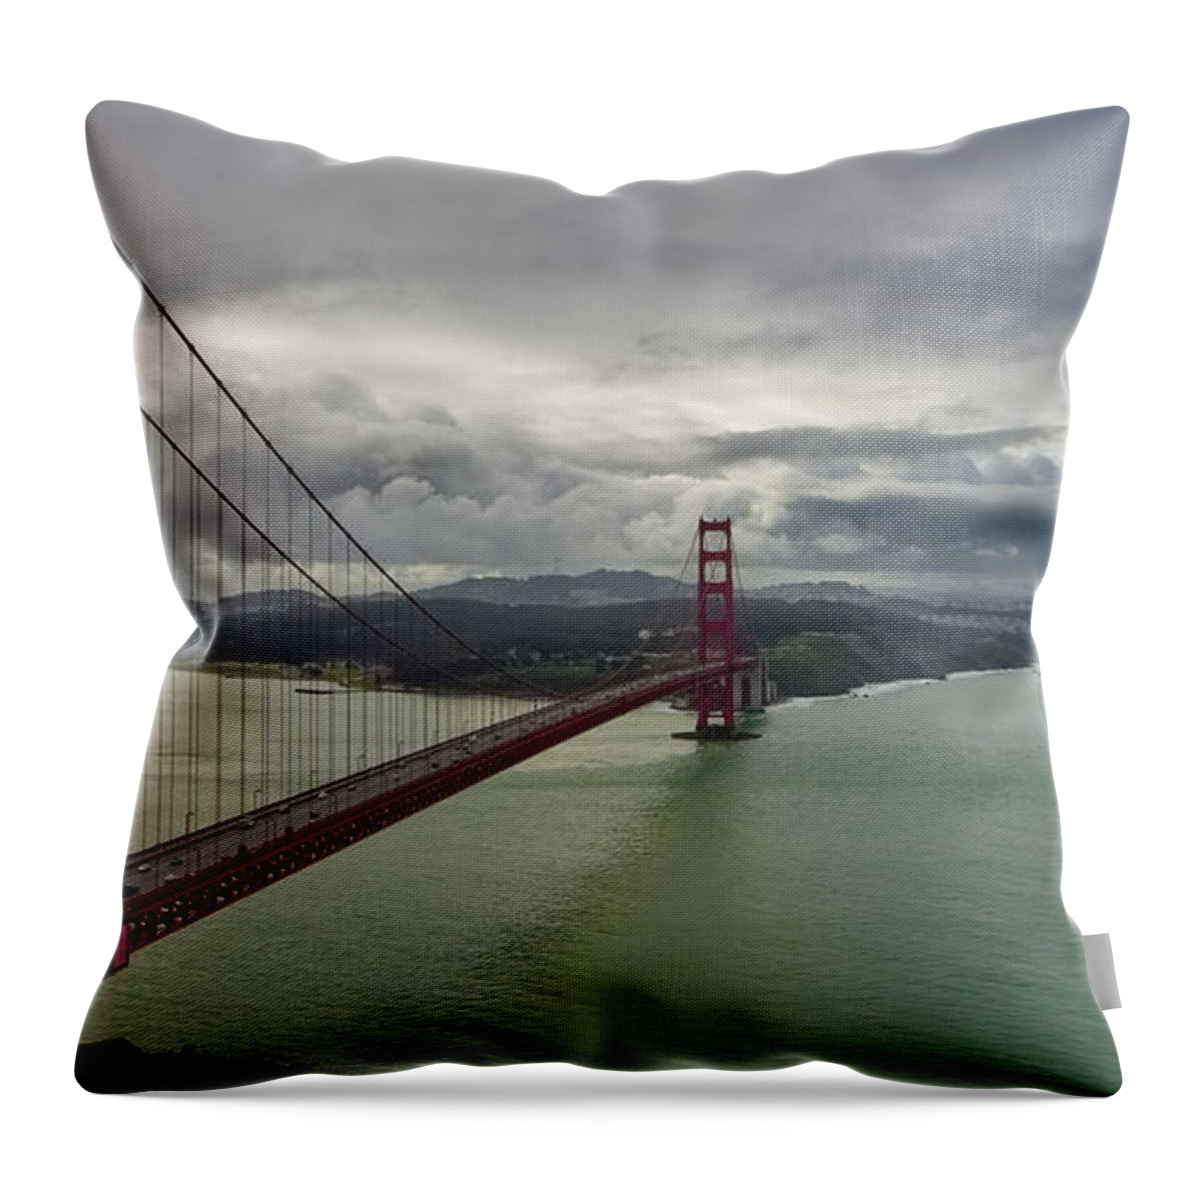 San Francisco Throw Pillow featuring the photograph San Francisco Golden Gate Bridge by Grant Groberg